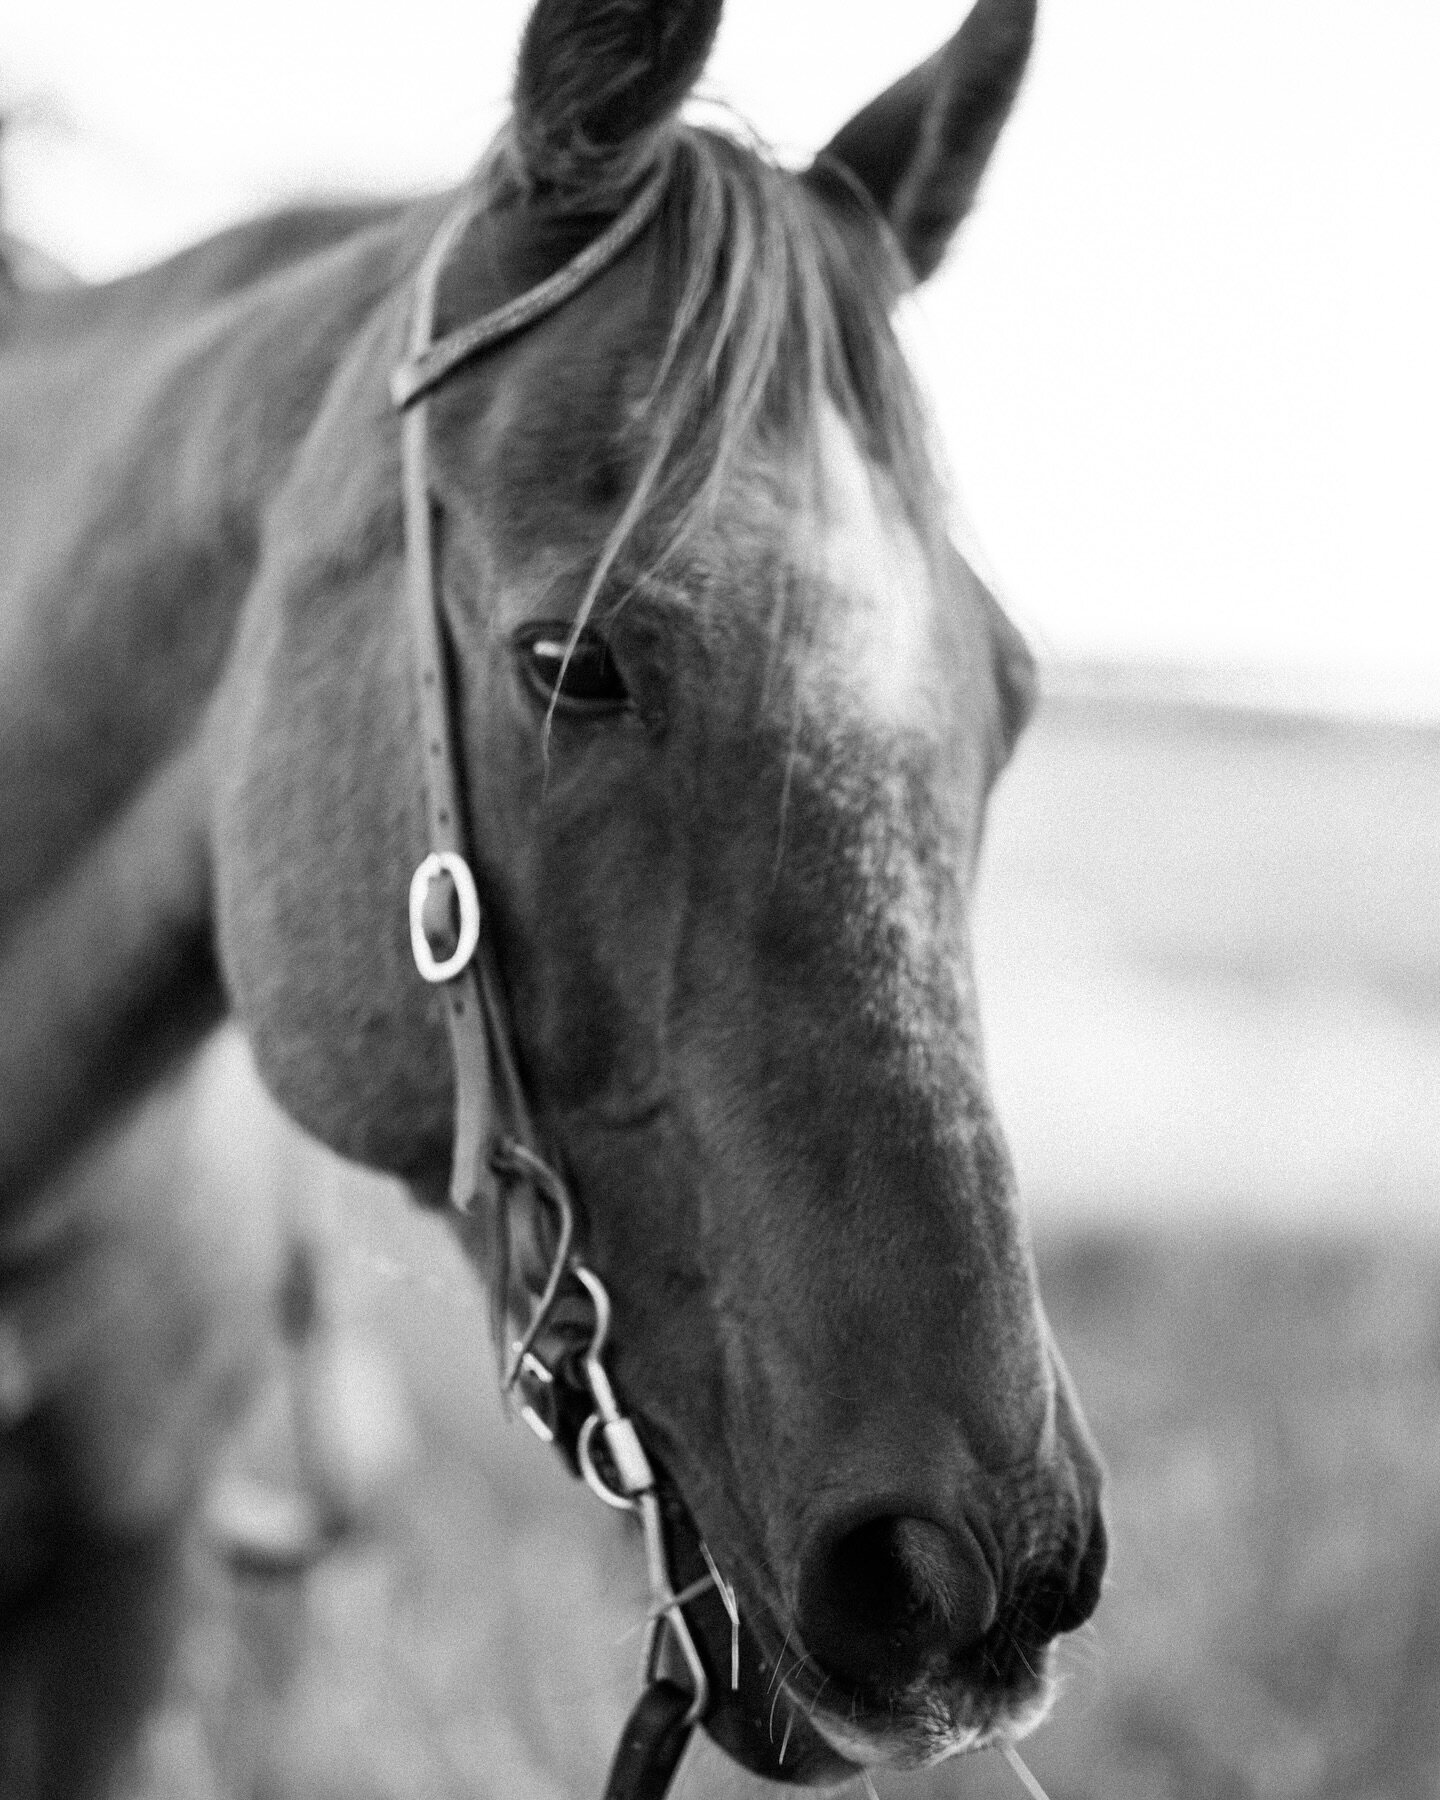 Continuing with the western vibe&hellip;I ♡︎ horses. Happy Saturday. xo

.

@fujifilmx_us #mediumformat #fuji #fujifilm #photographer #horsephotographer #equinephotography #animallovers #horse #blackandwhitephotography